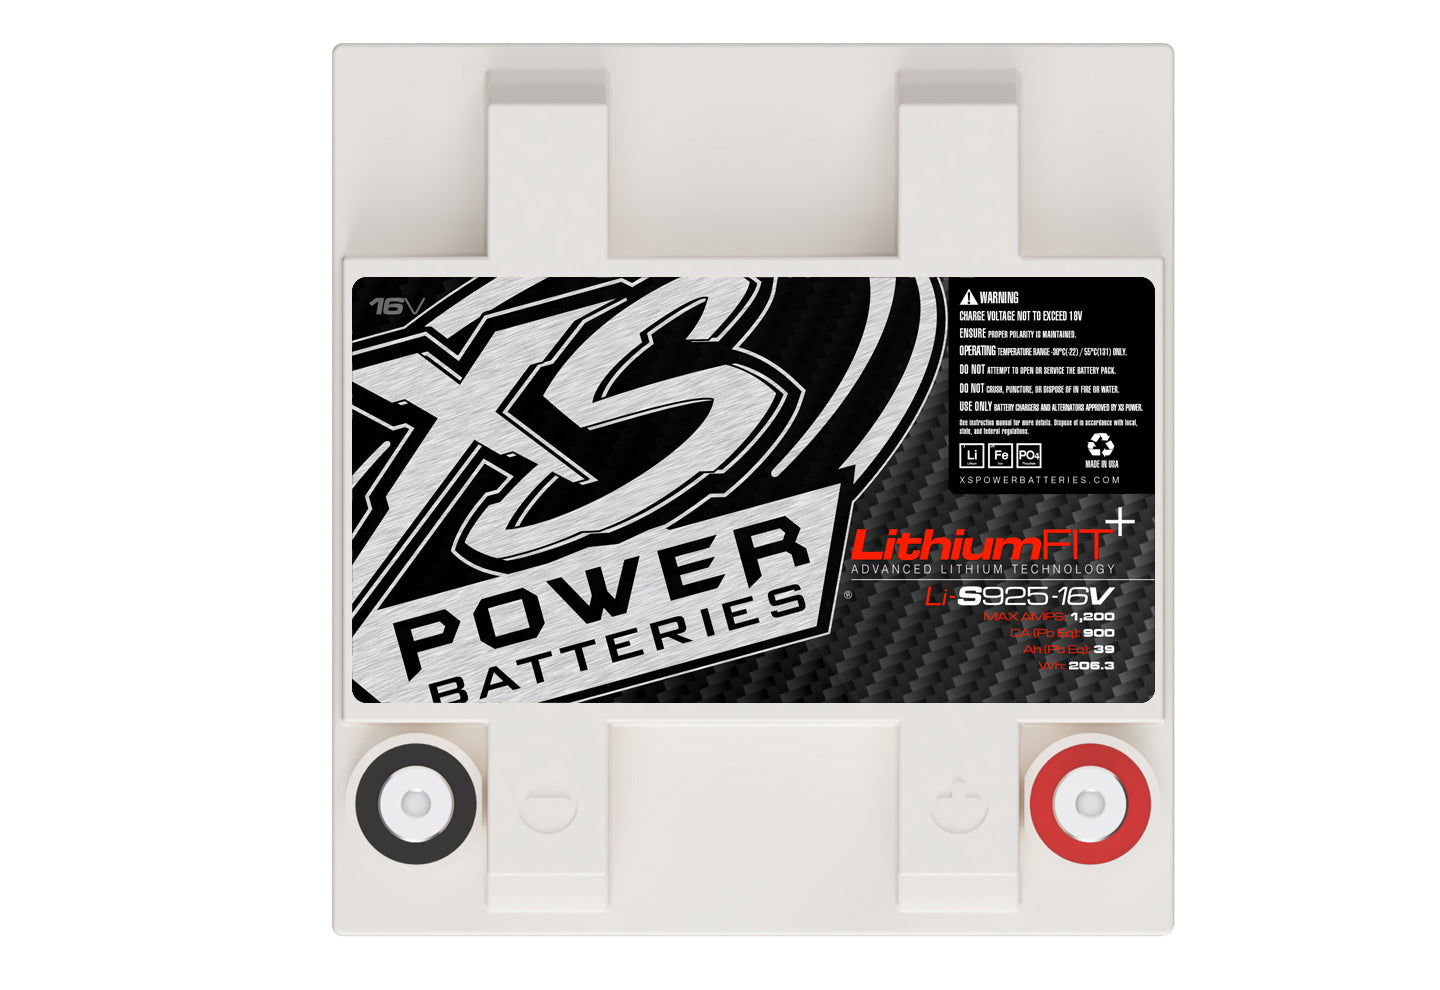 Li-S925-16 XS Power 16VDC Lithium Racing Vehicle Battery 1440A 15.6Ah